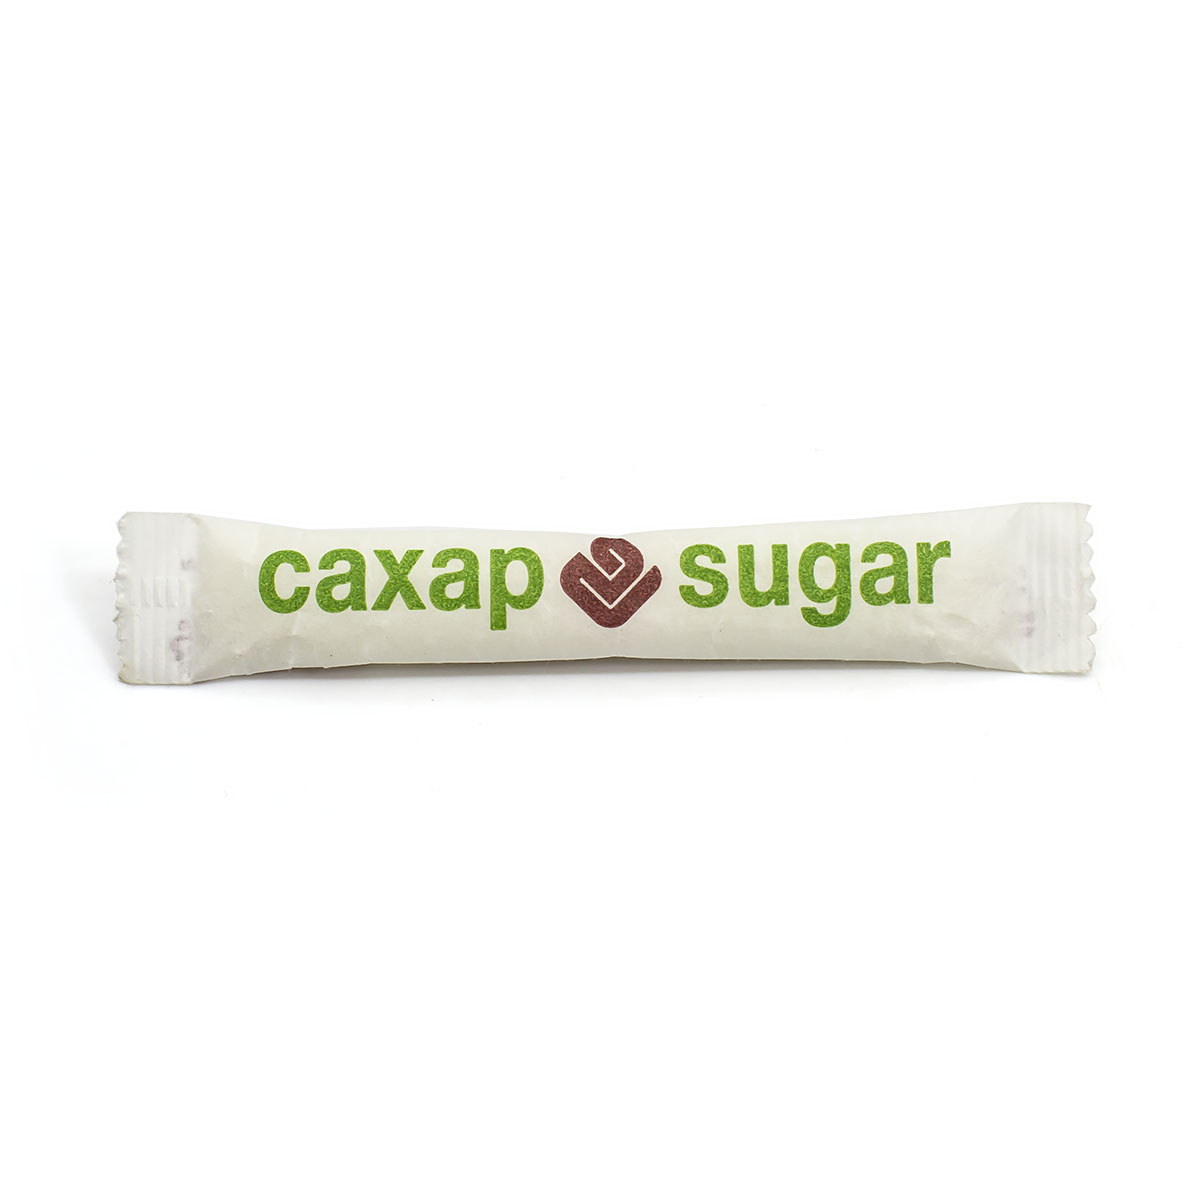 Г сахар 5 г соль. Сахар порционный белая упаковка 5г (1кг/200 стиков). Сахар порционный 5 гр. Сахар в стиках. Сахар в индивидуальной упаковке.